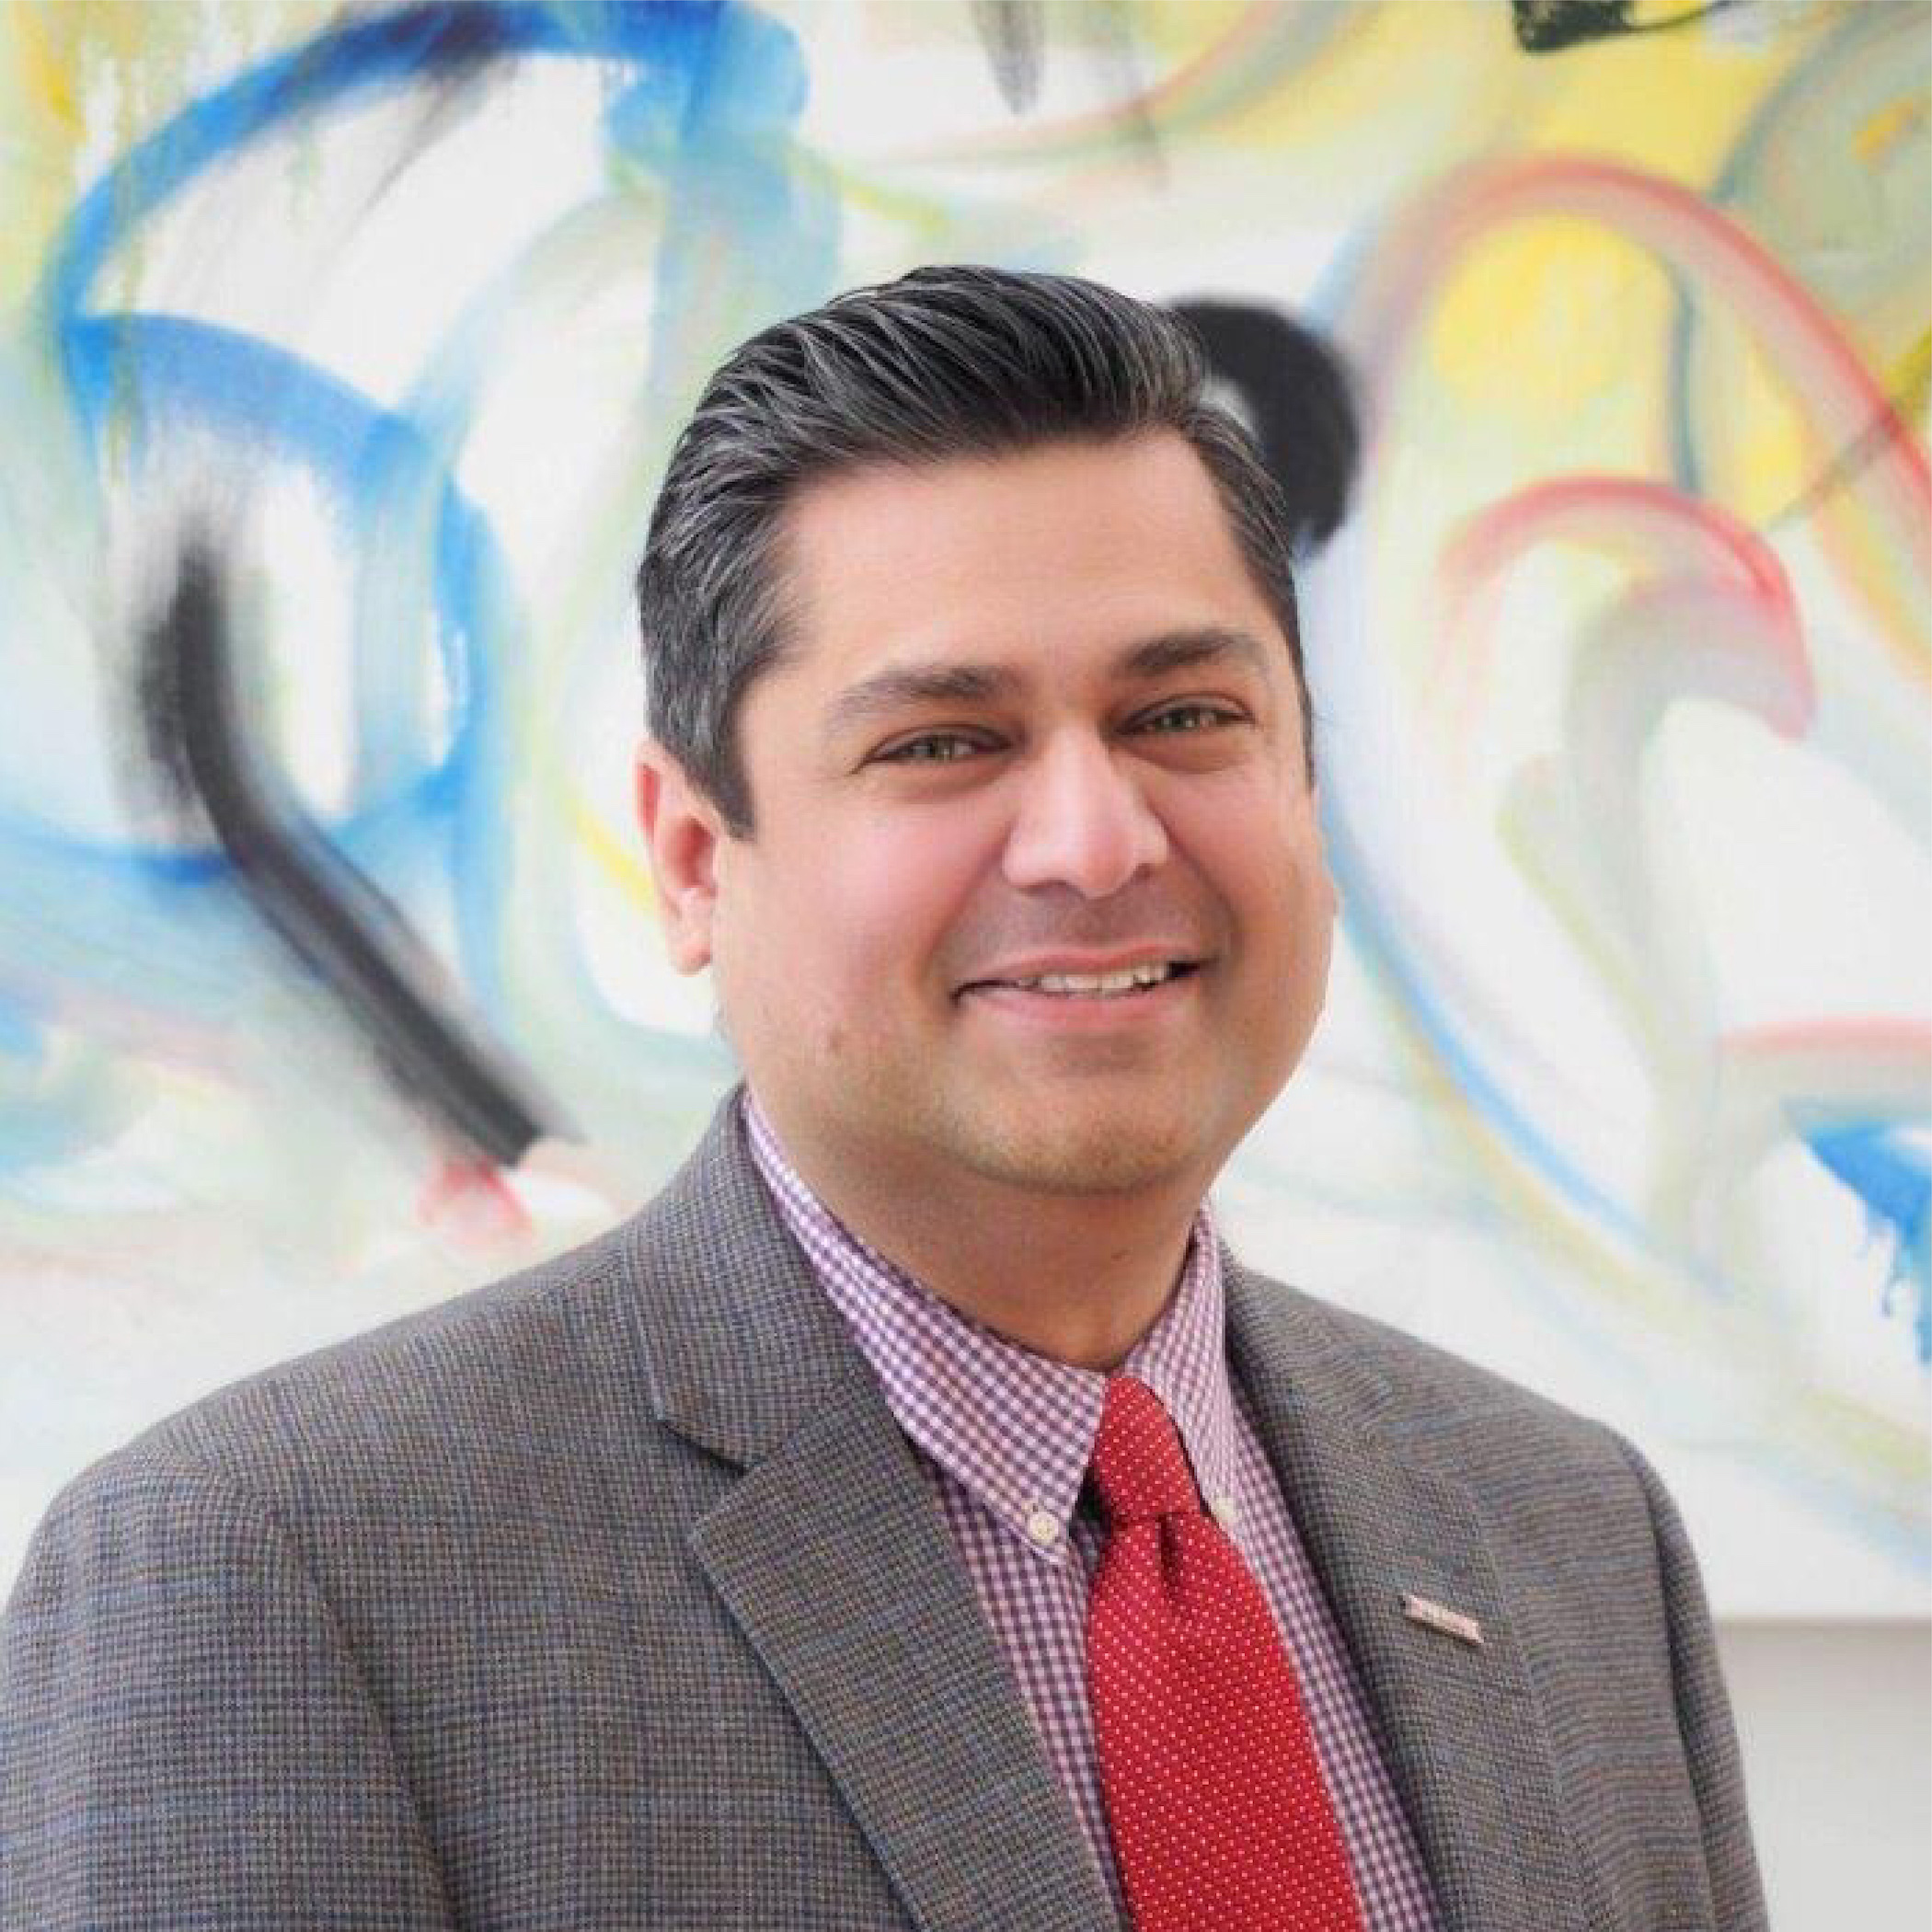 Dr. Faisal Khan, Director, Public Health - Seattle & King County